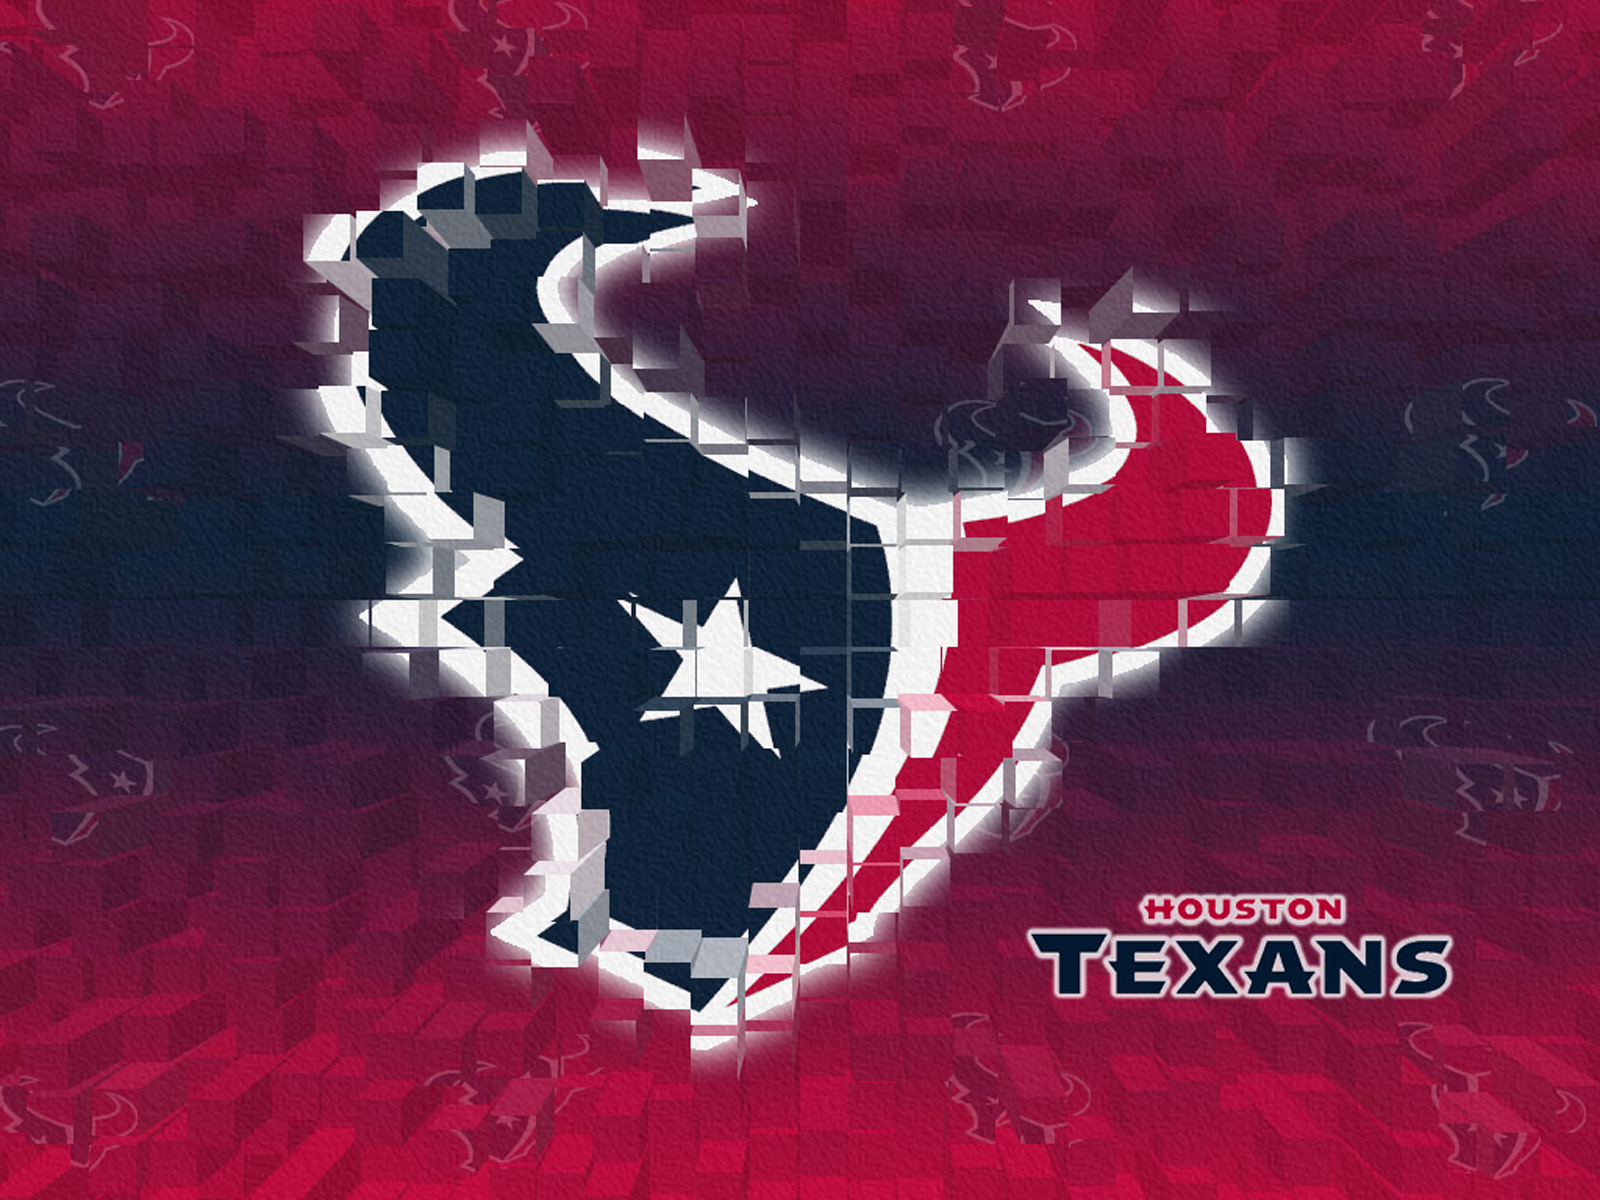 Houston Texans wallpaper Houston Texans logo nfl wallpaper